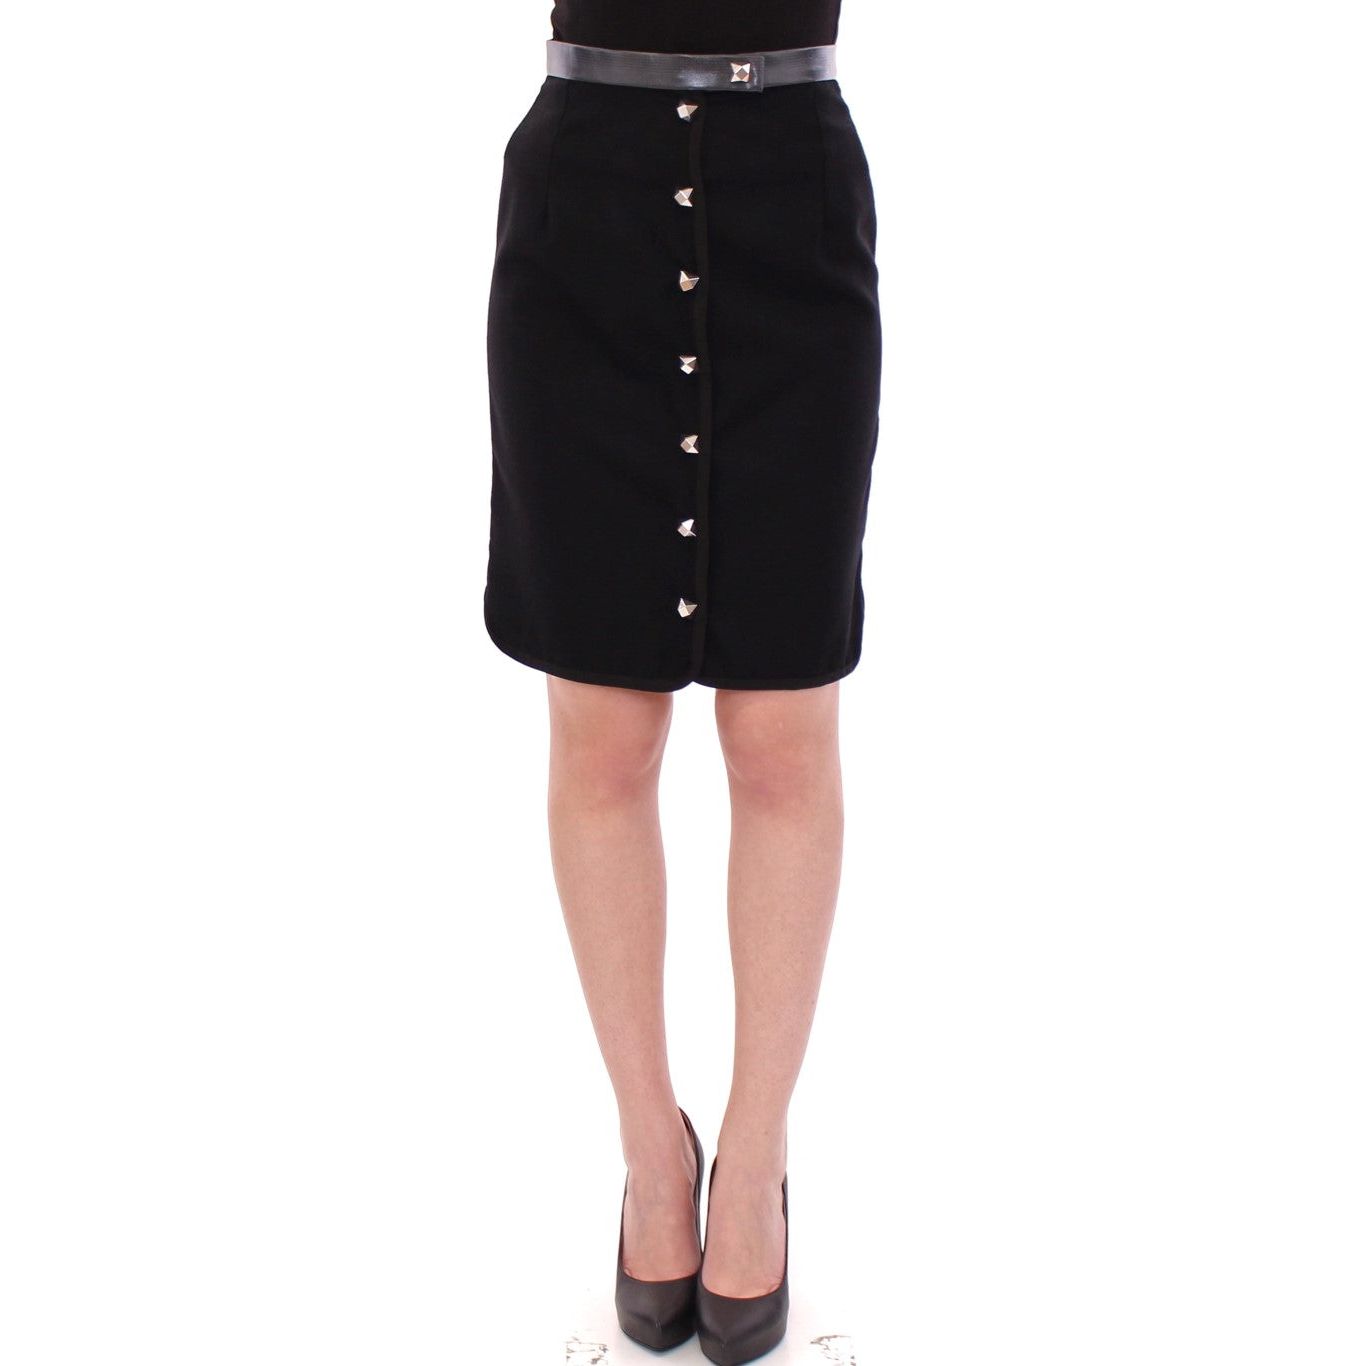 Corrado De Biase Elegant Black Wool-Cotton Blend Skirt black-metal-buttons-cotto-wool-skirt 149832-black-metal-buttons-cotto-wool-skirt.jpg